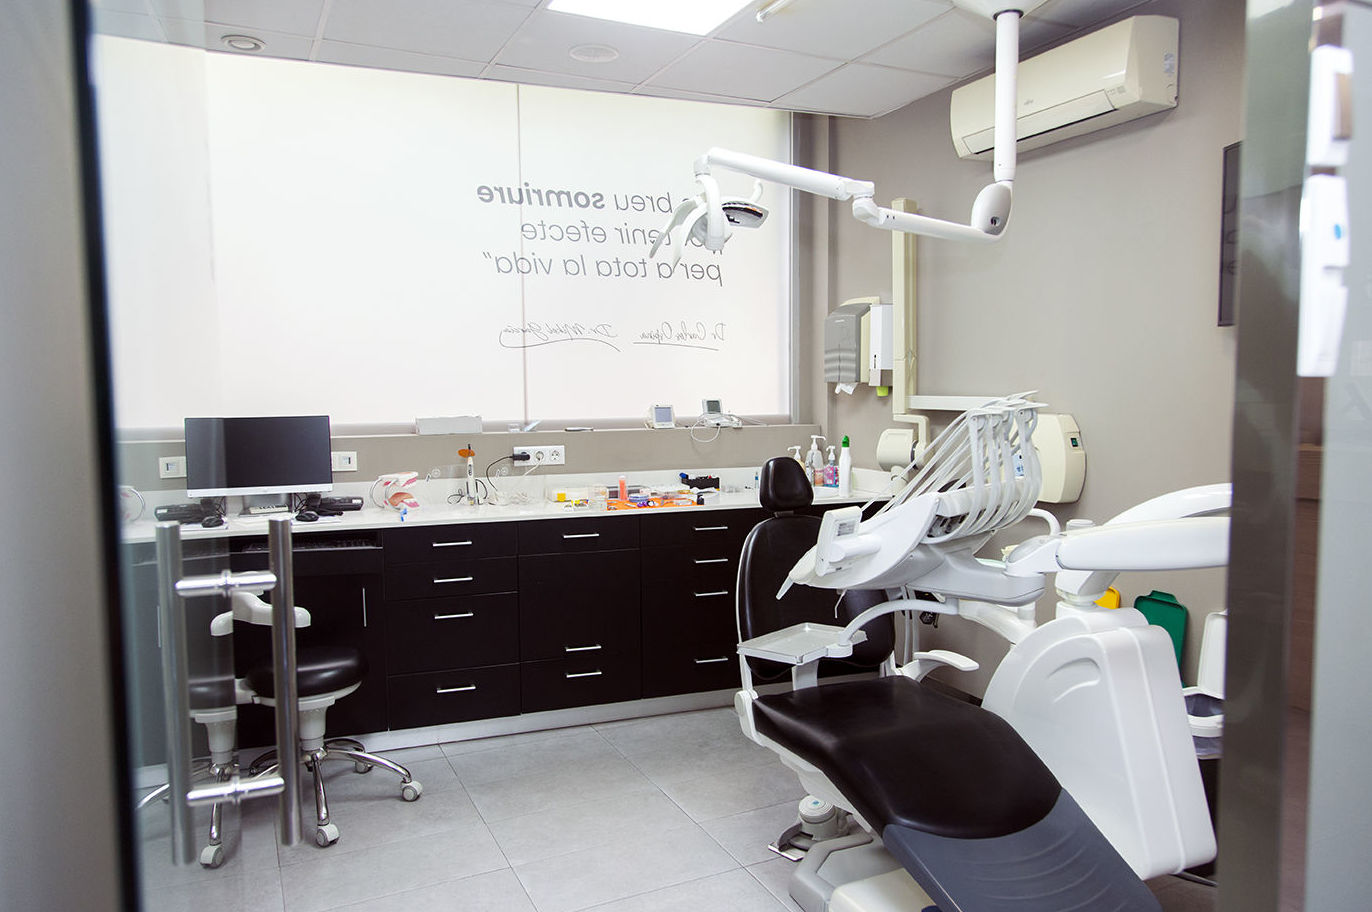 Foto 6 de Clínicas dentales en Martorell | Bukalix